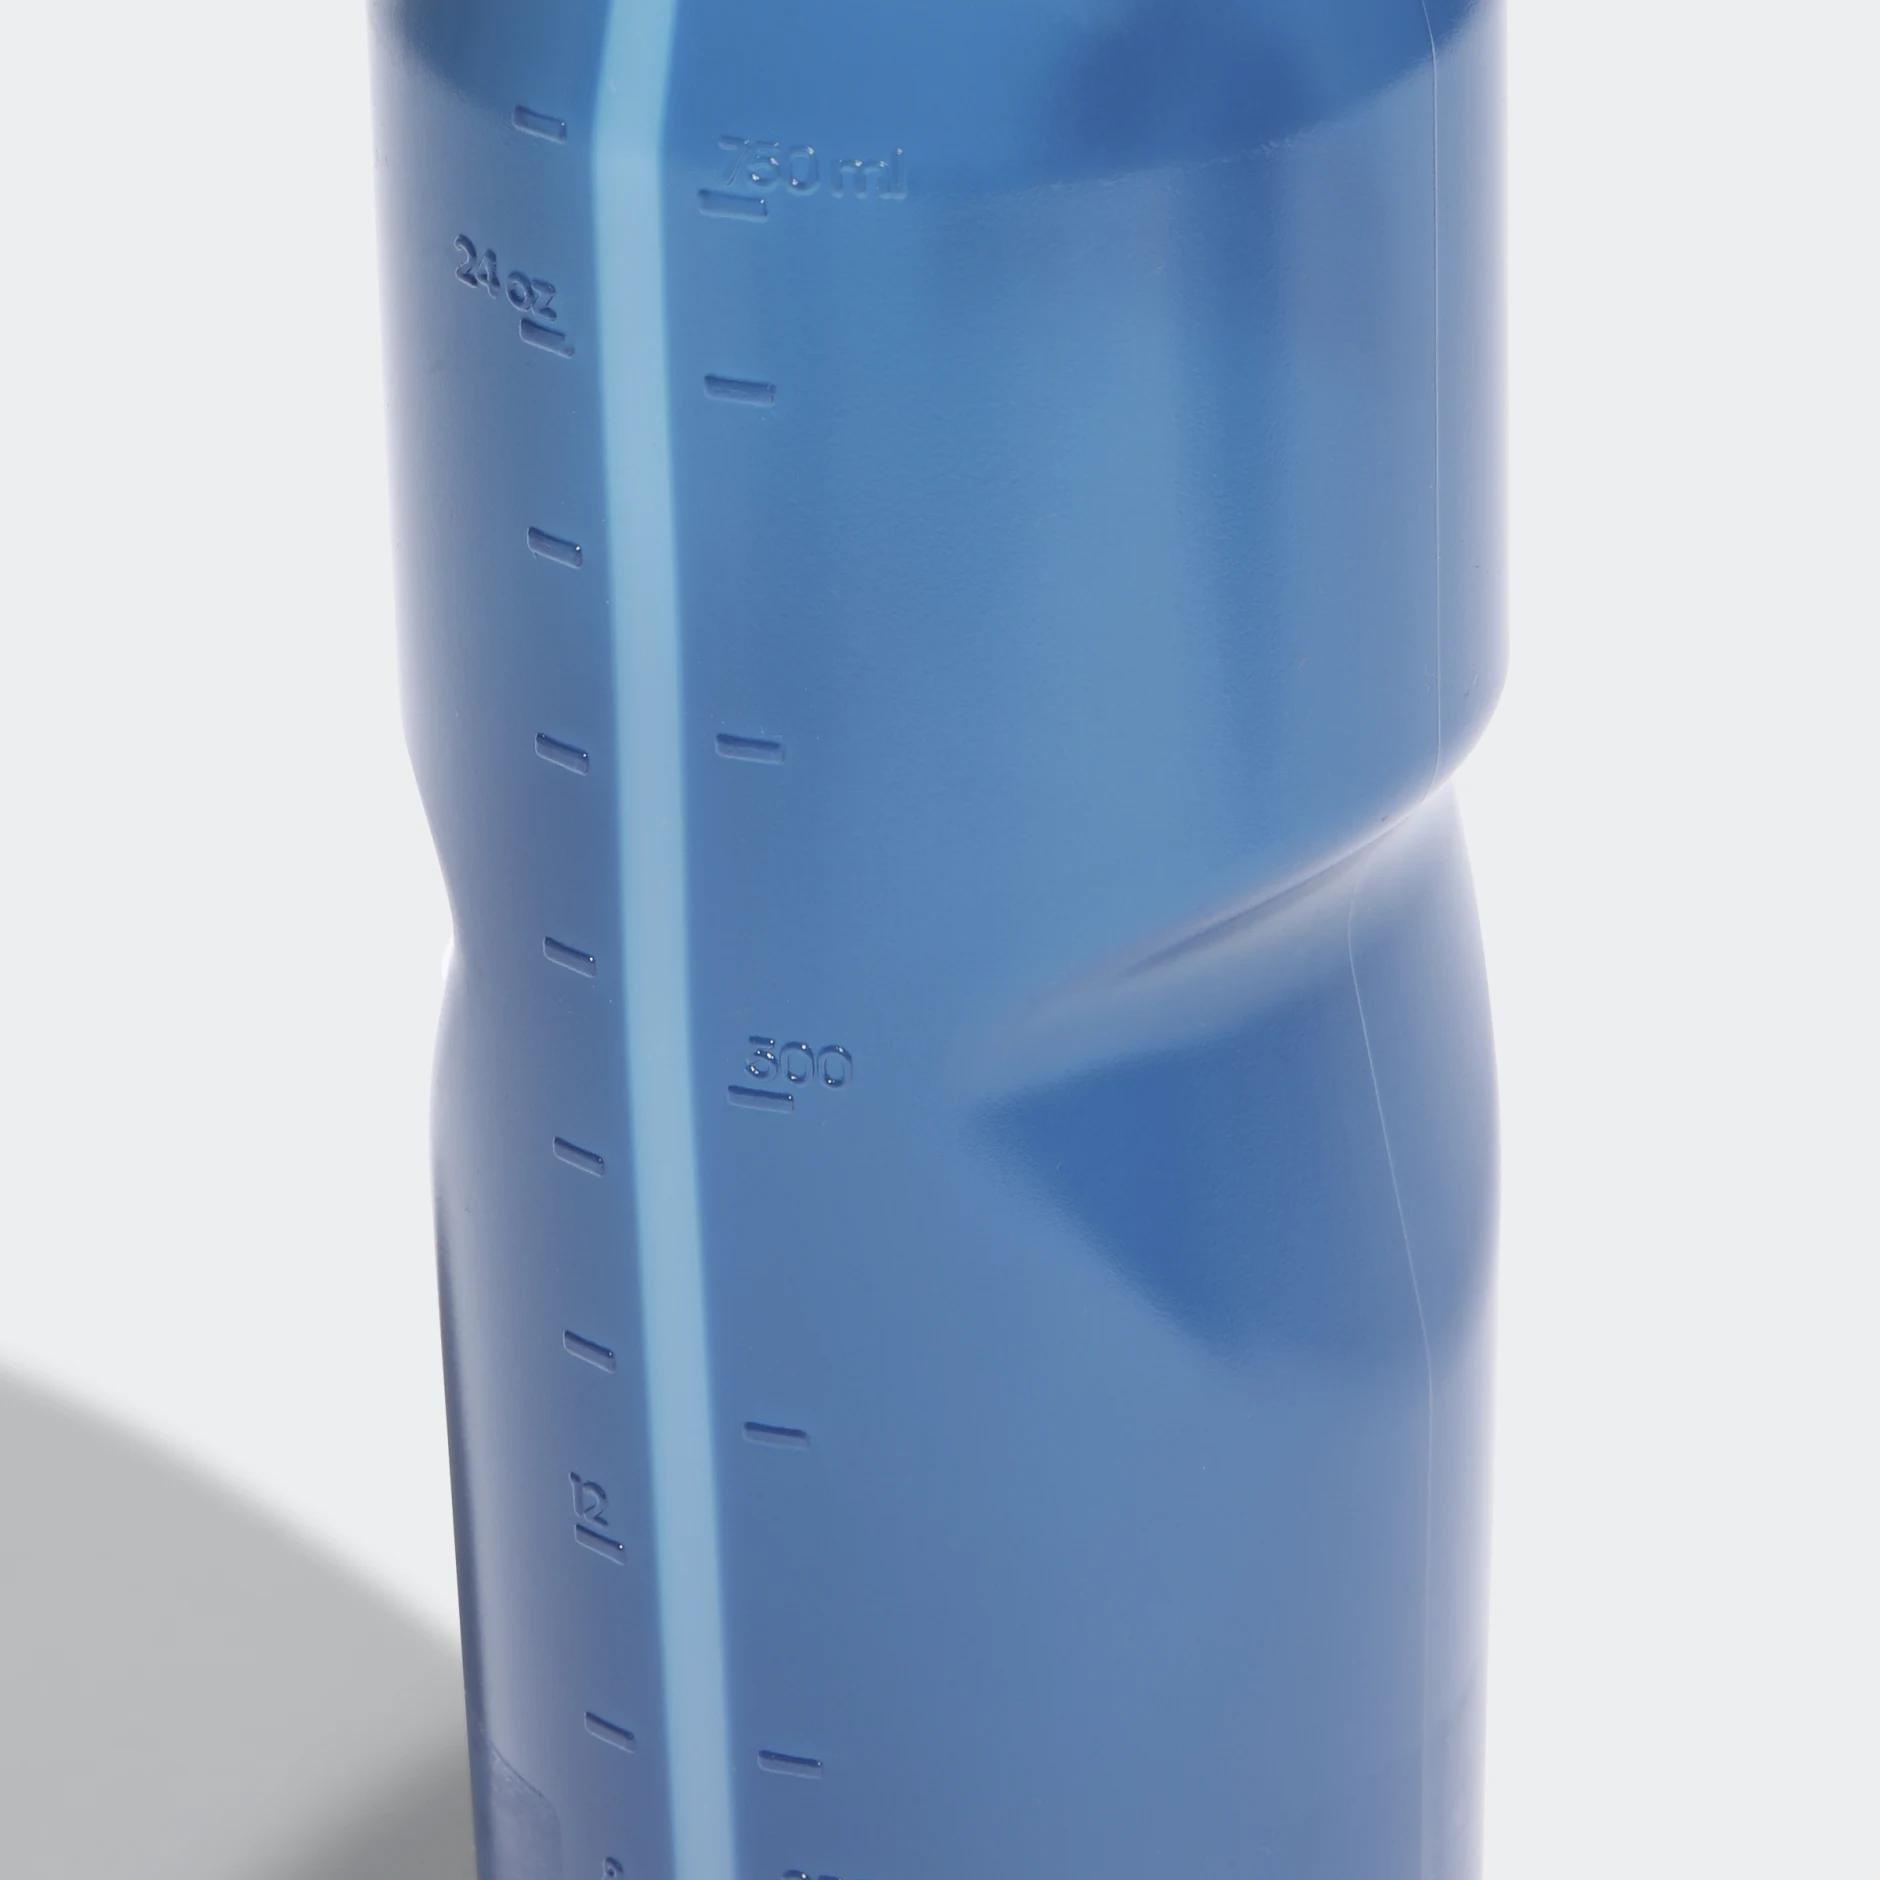 adidas - Performance Water Bottle 750 ML Unisex Adult